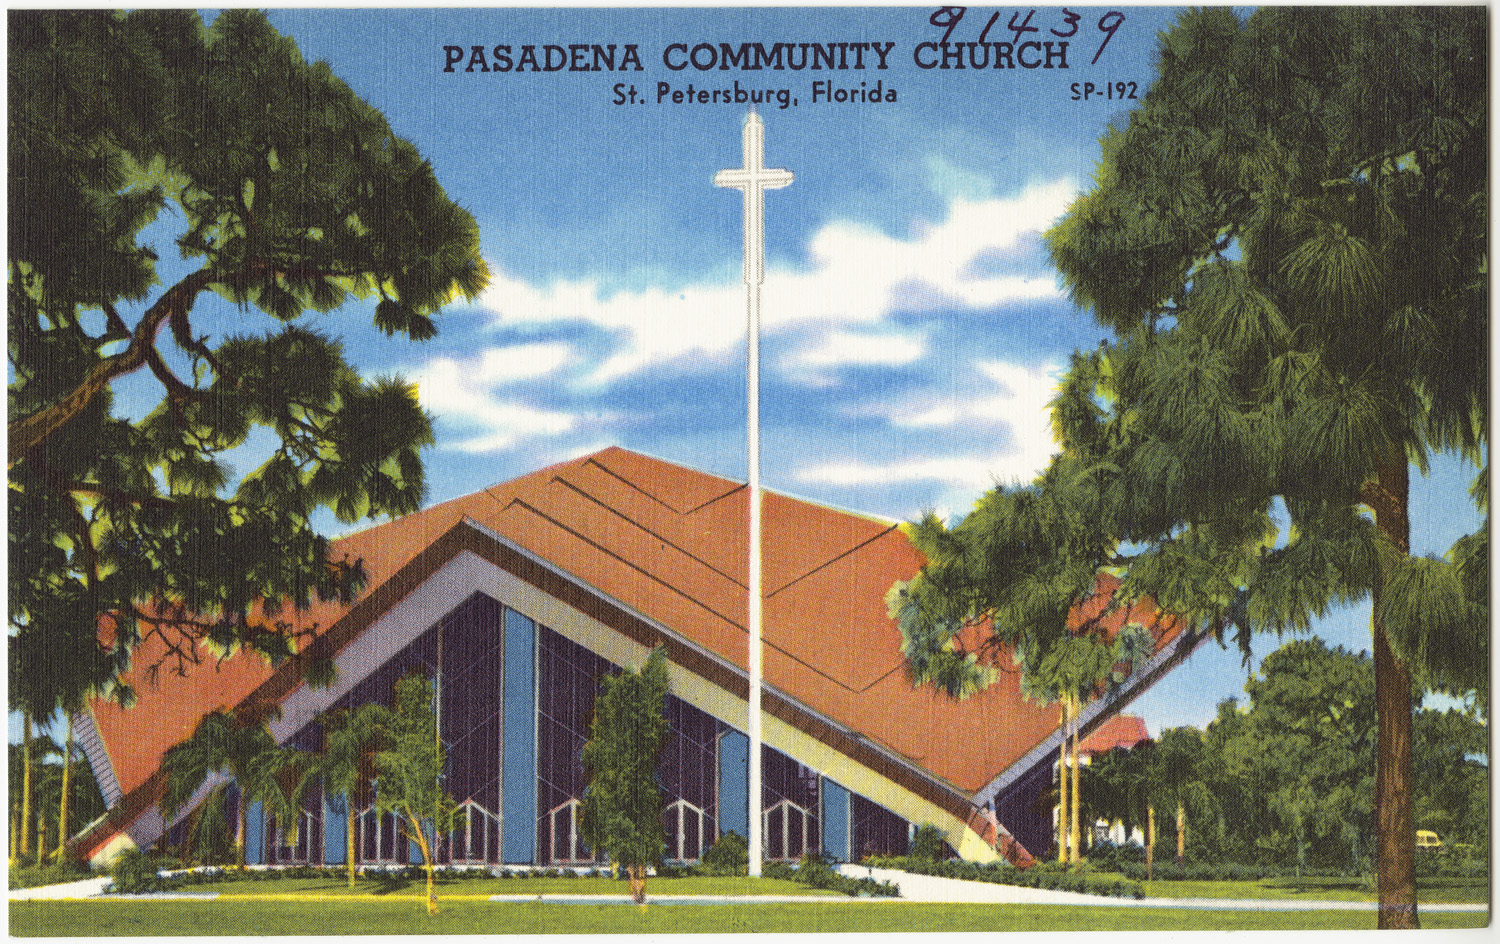 an image of the pasadena community church